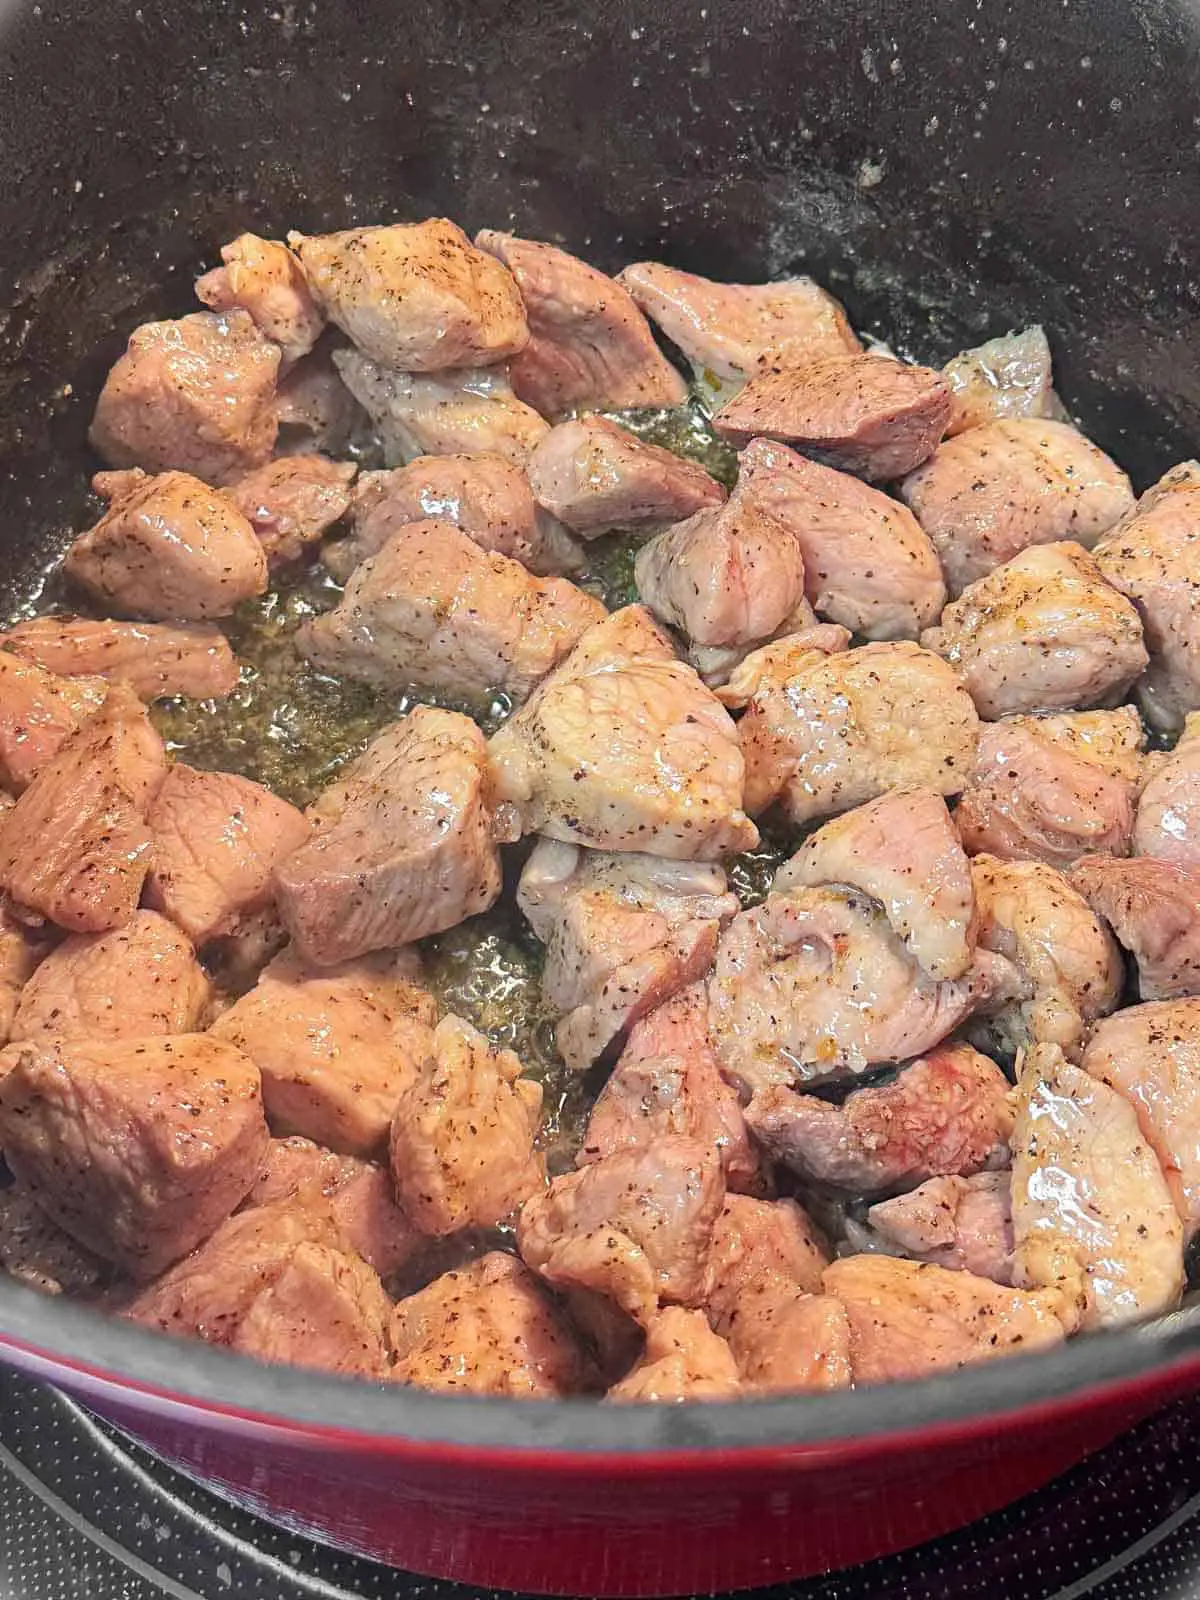 Pieces of pork shoulder browned in a large pot.